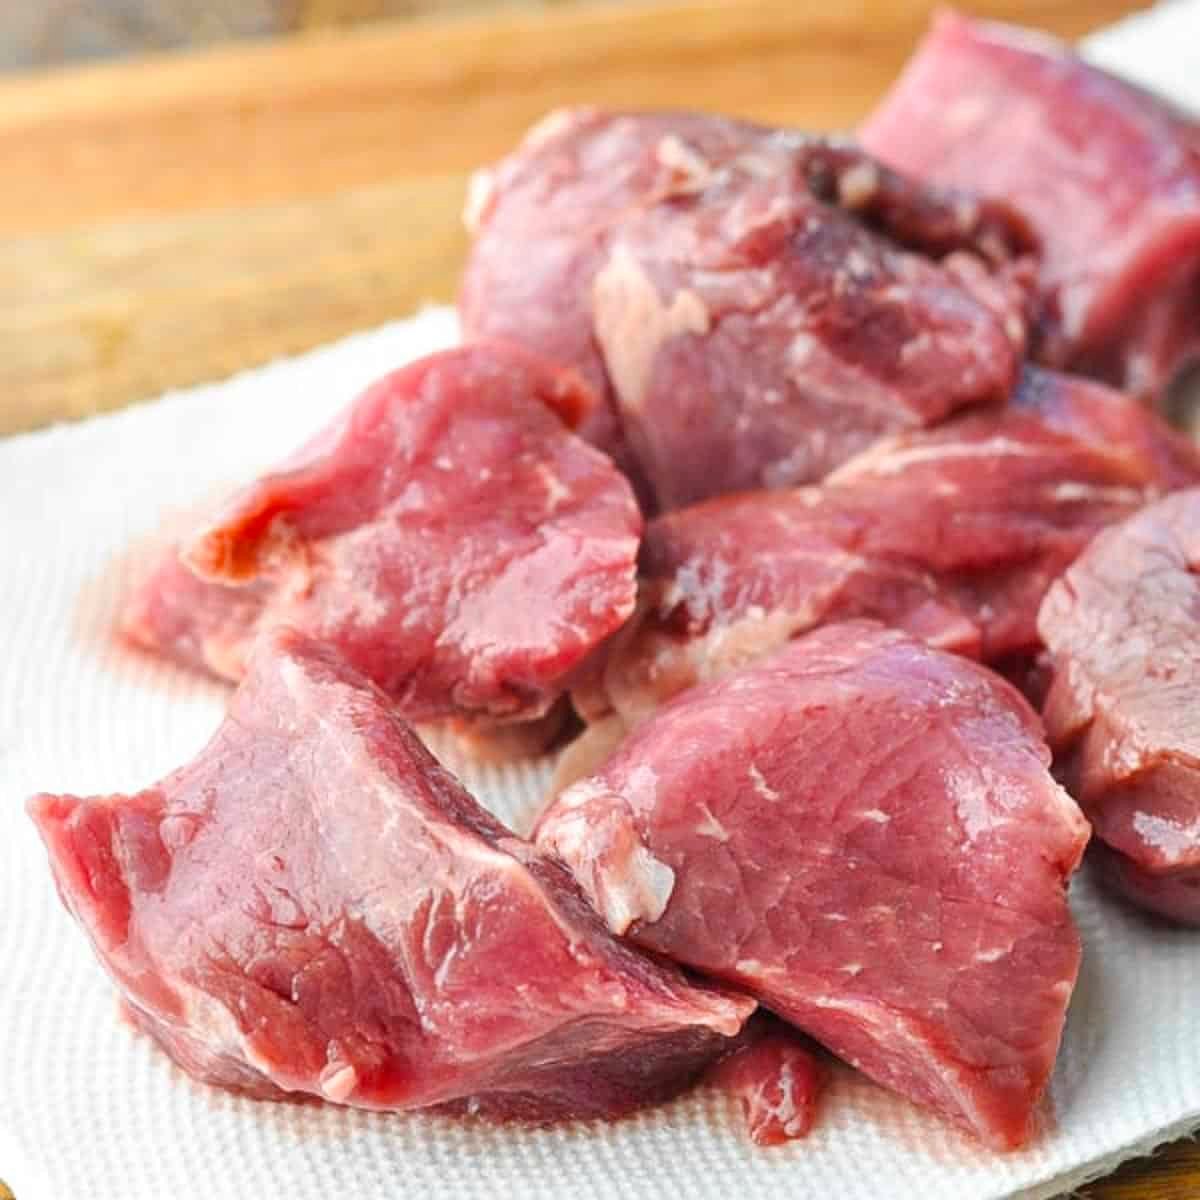 Raw steak tips.